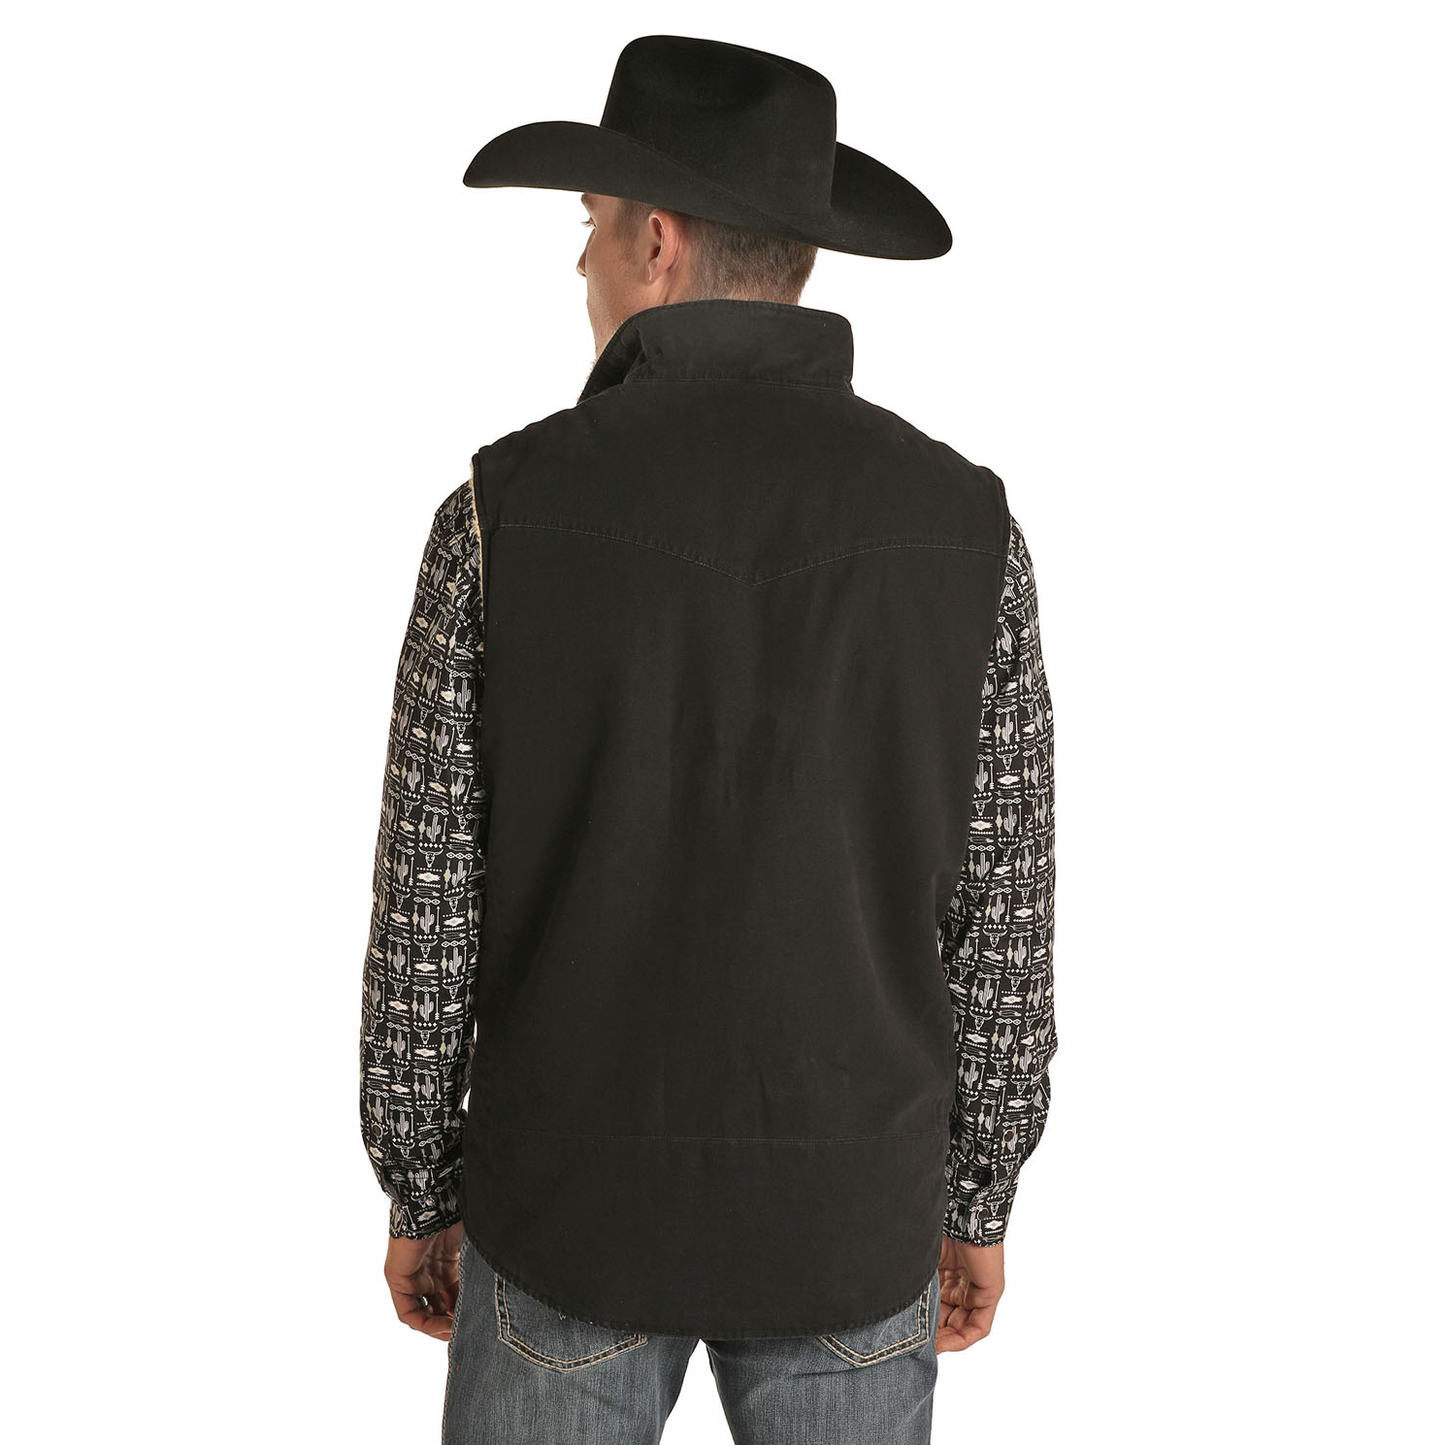 Powder River Outfitters Conceal Carry Cotton Canvas Vest- Black